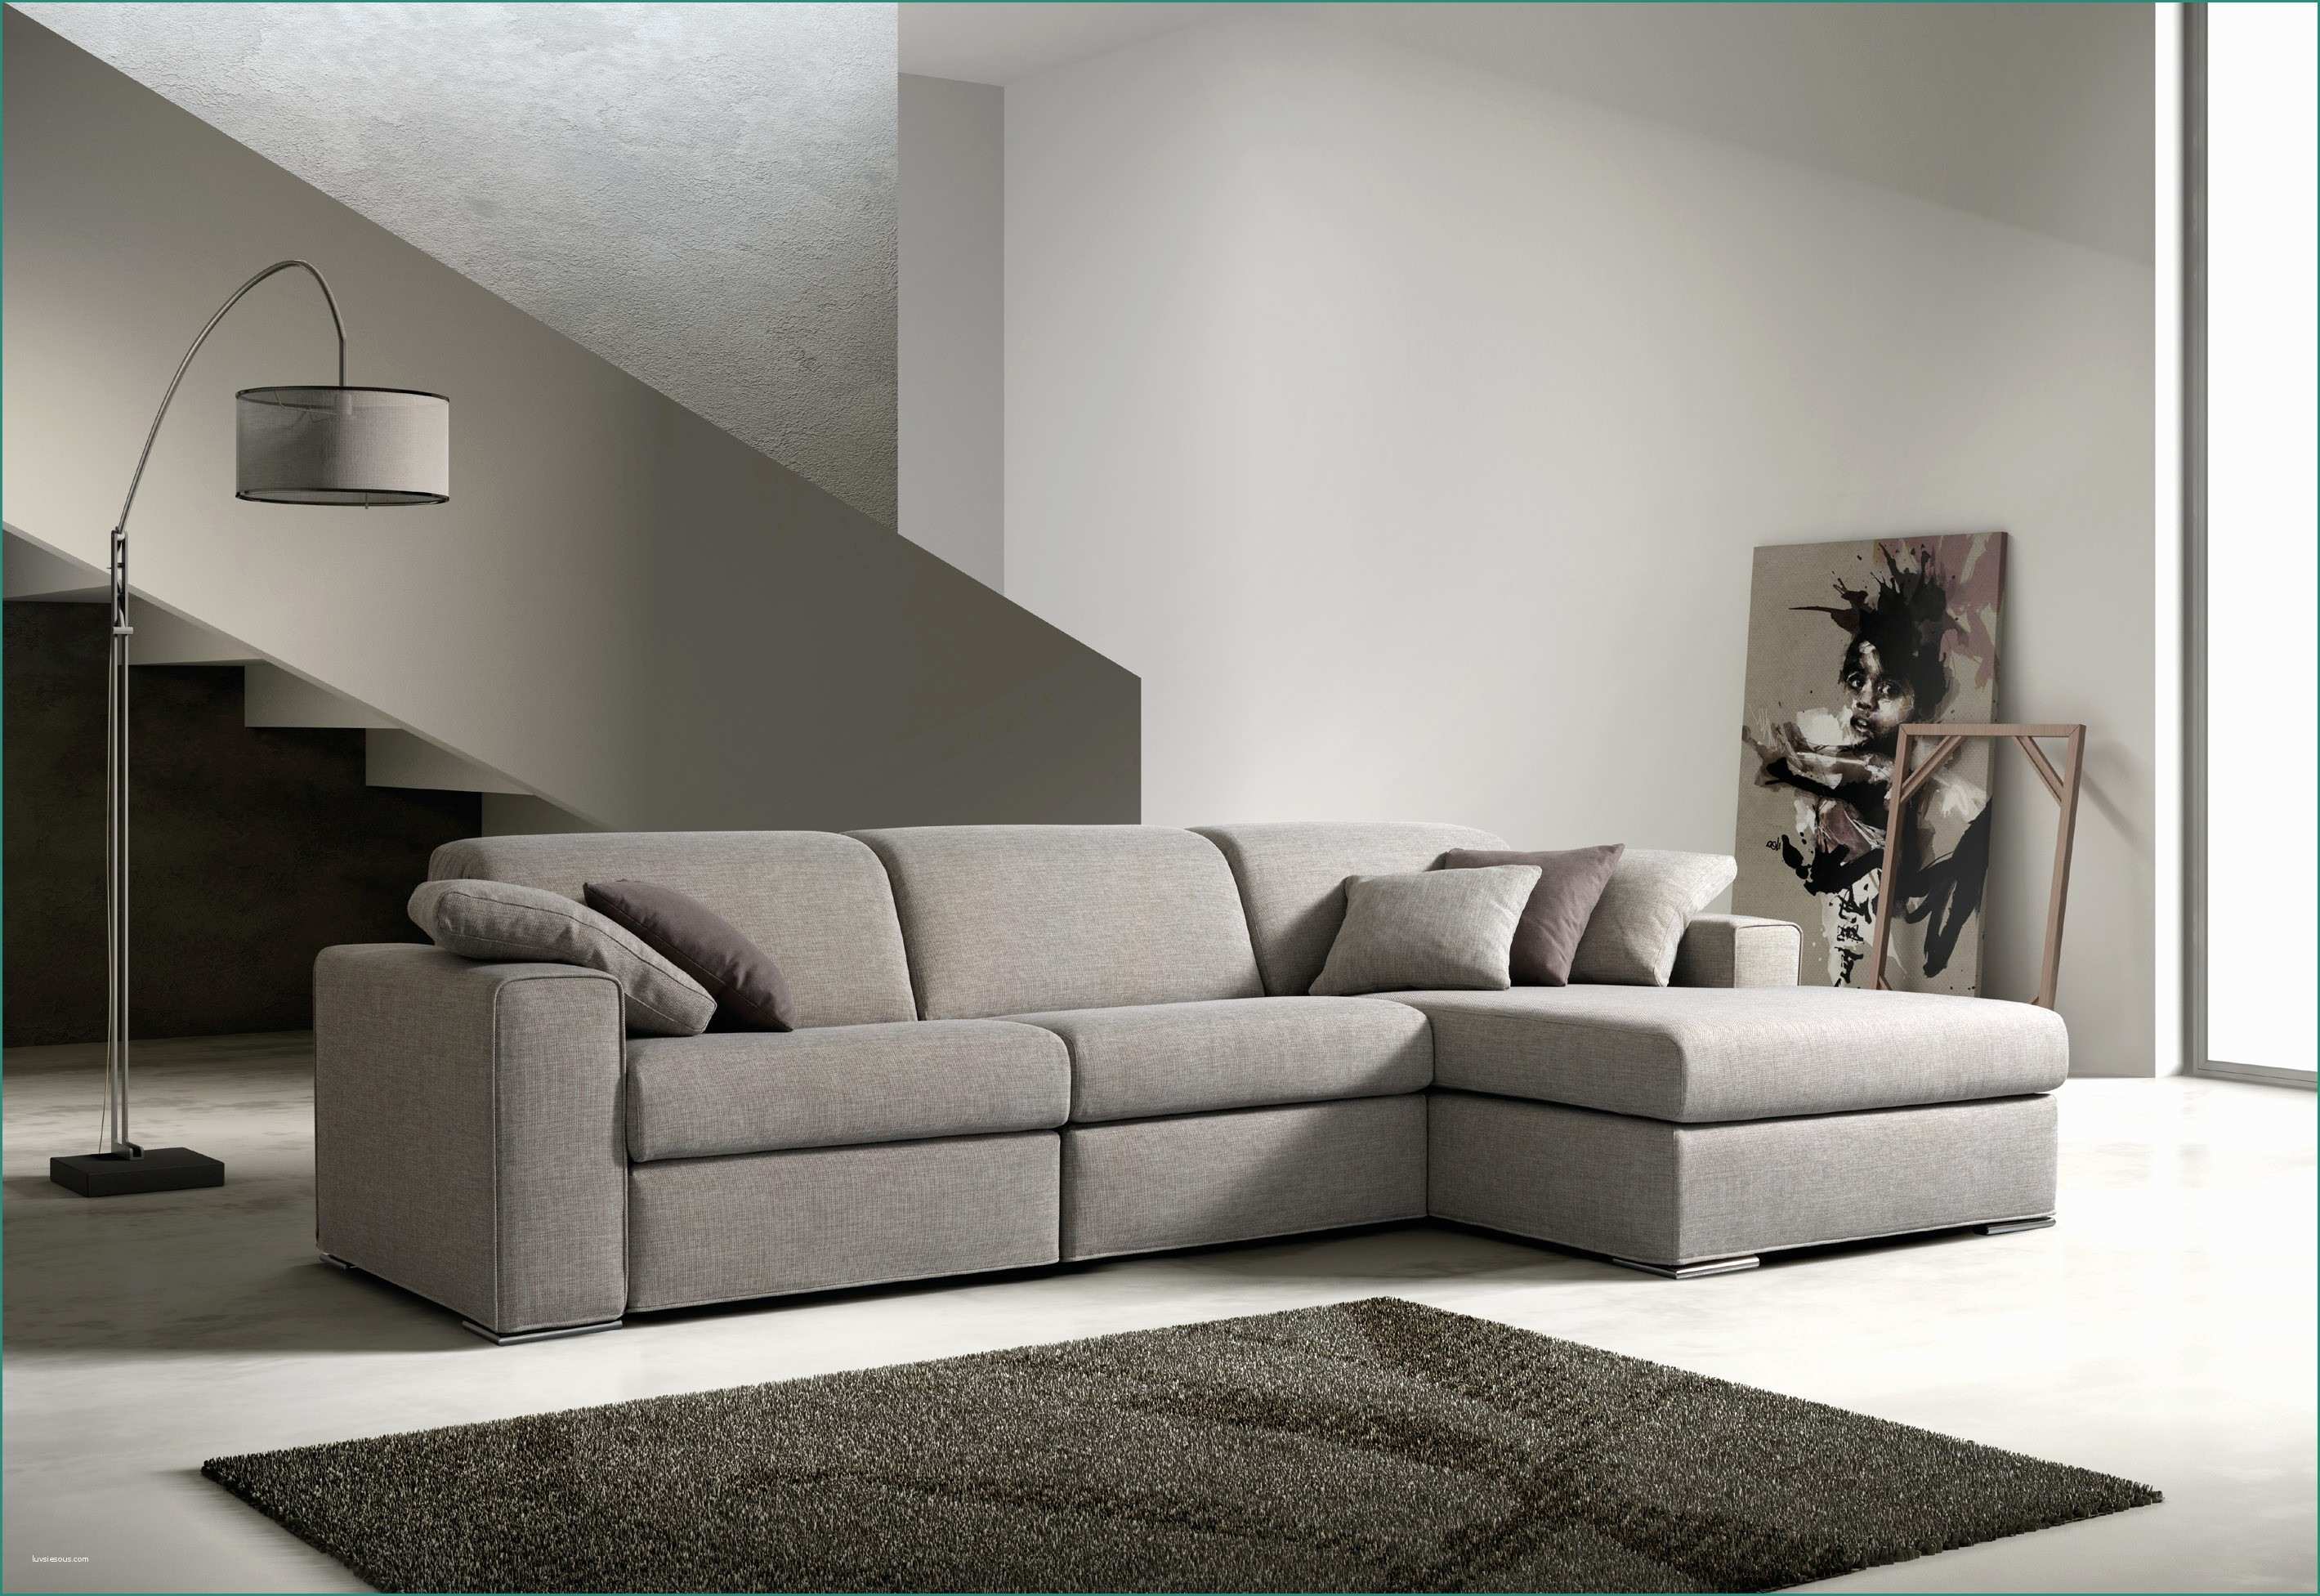 Divani Cassina Outlet E Tanghetti Divani House solutions Pinterest Furniture Upholstery